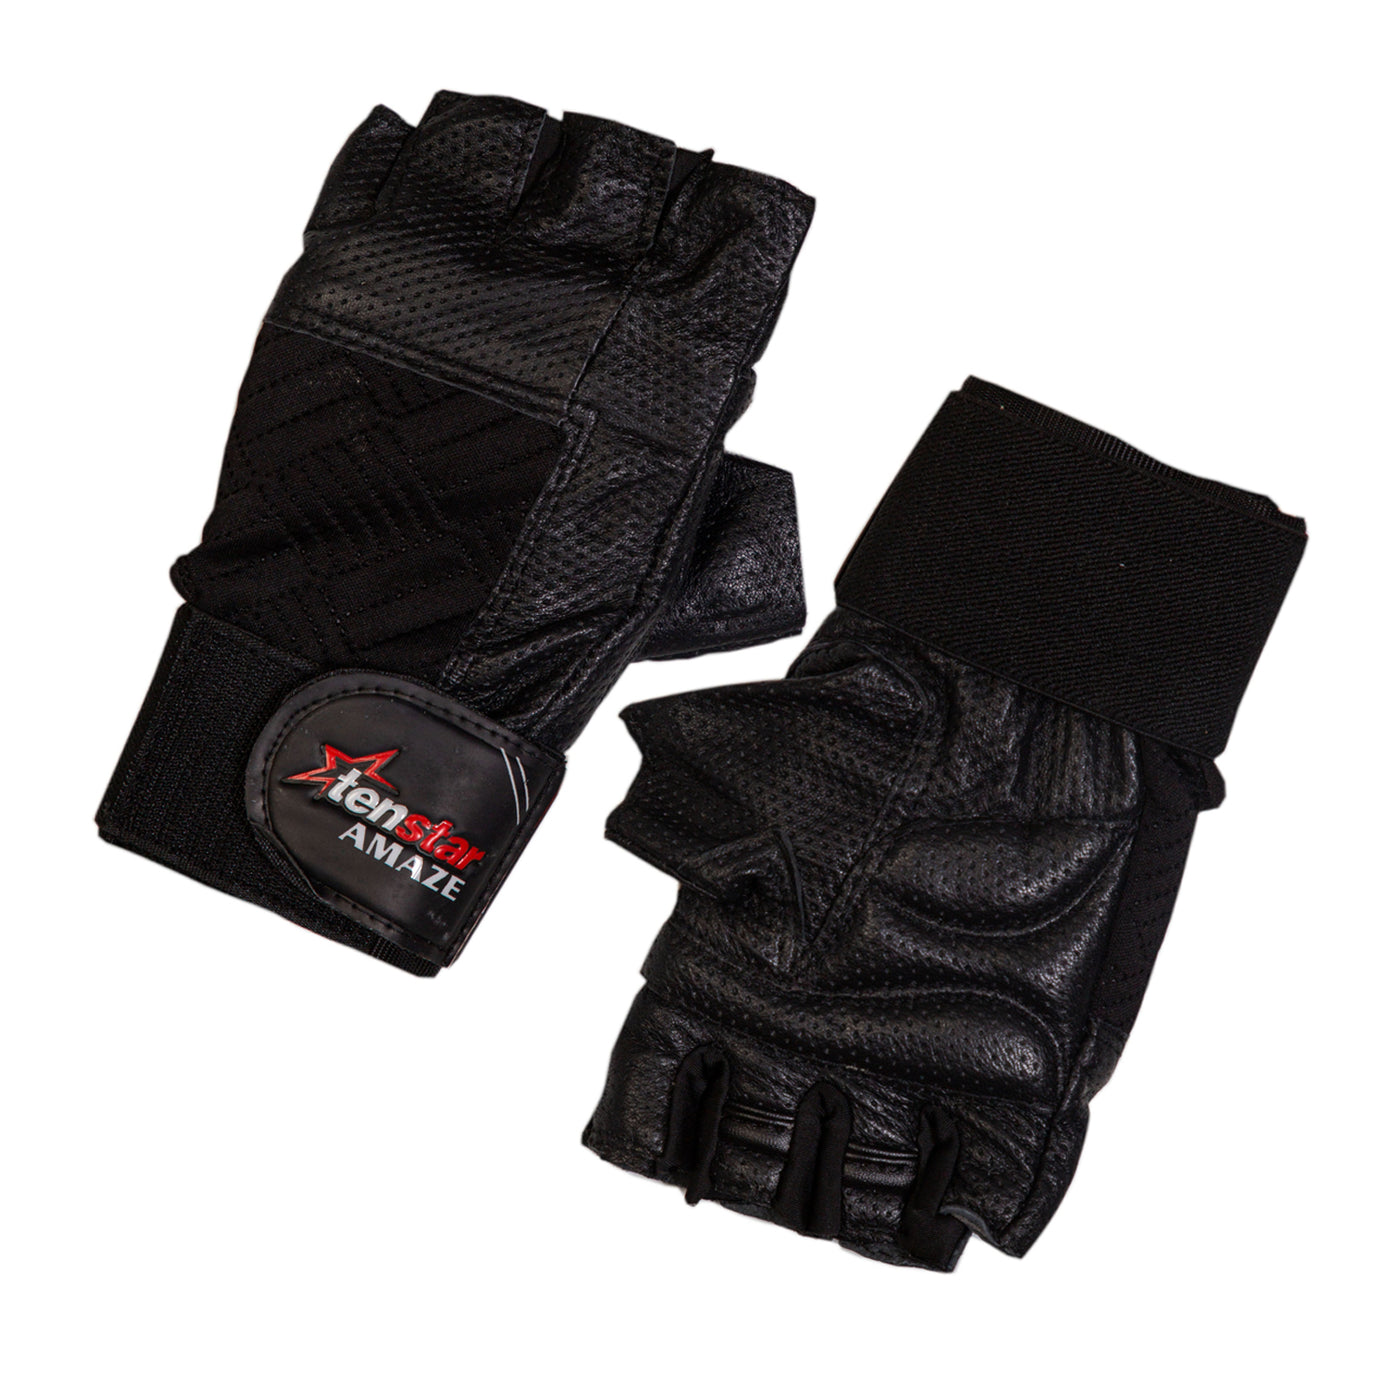 Tenstar Tenstar Amaze  Half Finger Gym Gloves - Black freeshipping - athletive Gym Gloves - Men athletive